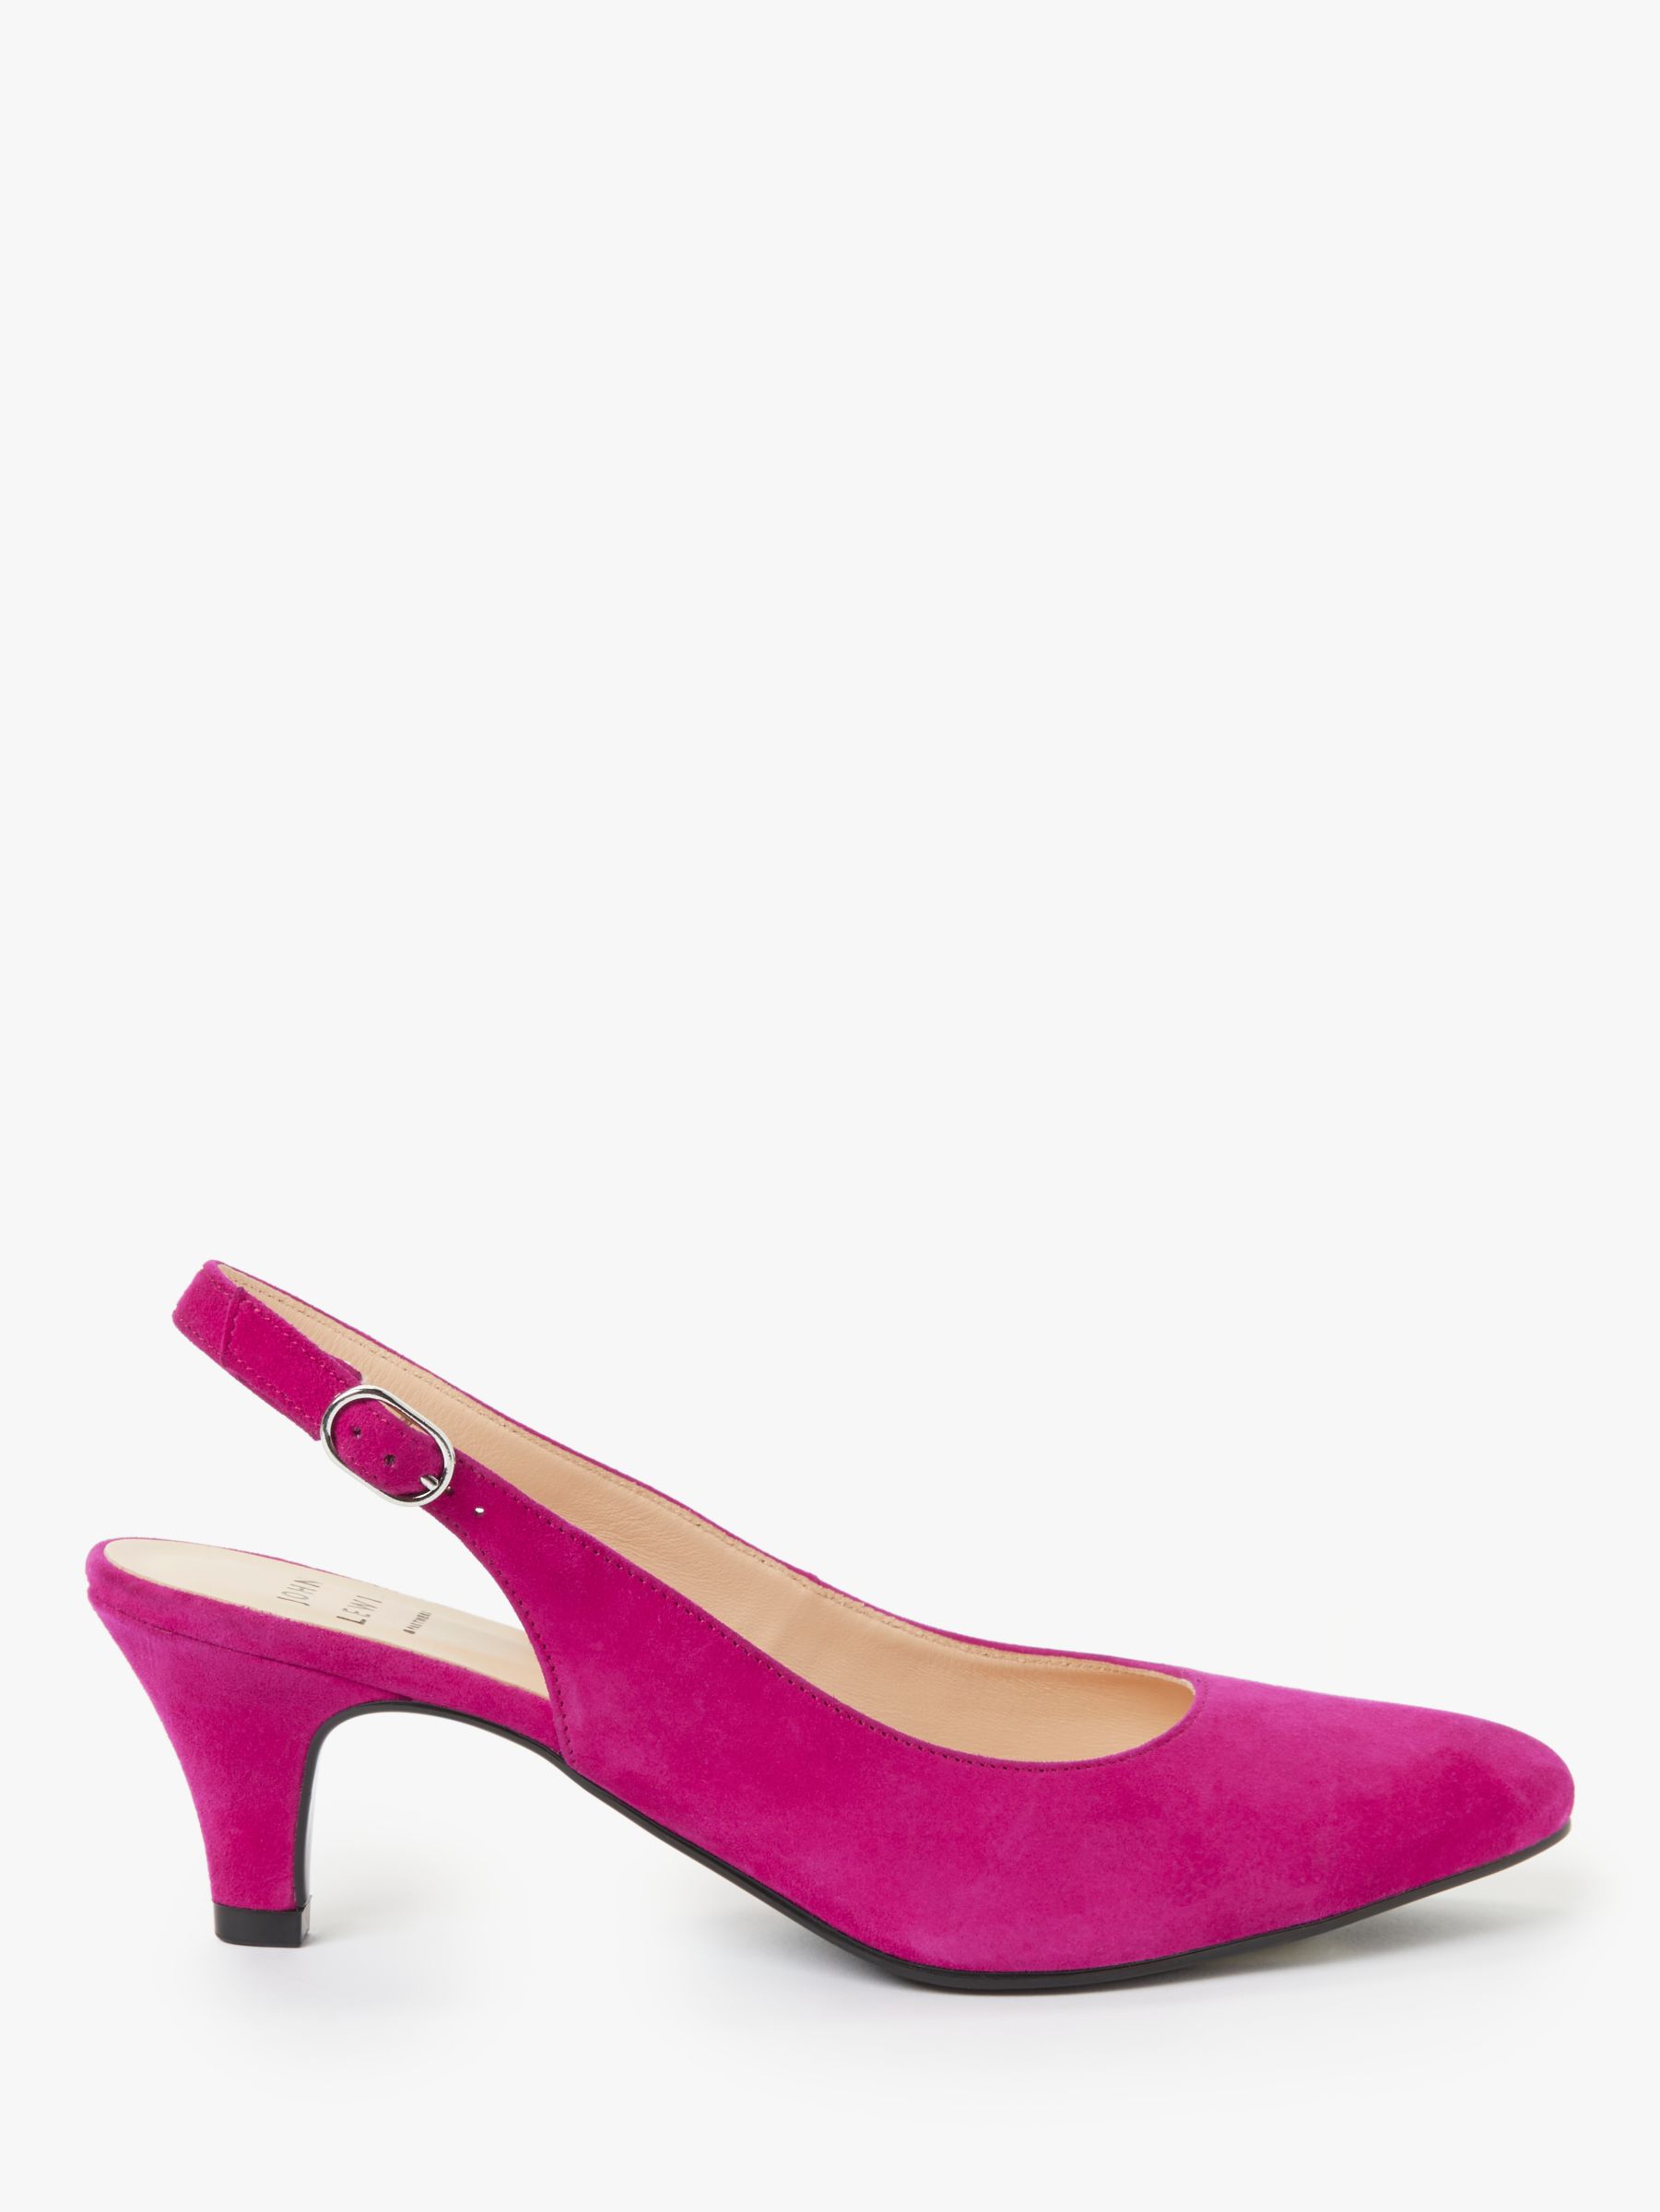 John Lewis Grace Suede Slingback Court Shoes, Pink at John Lewis & Partners